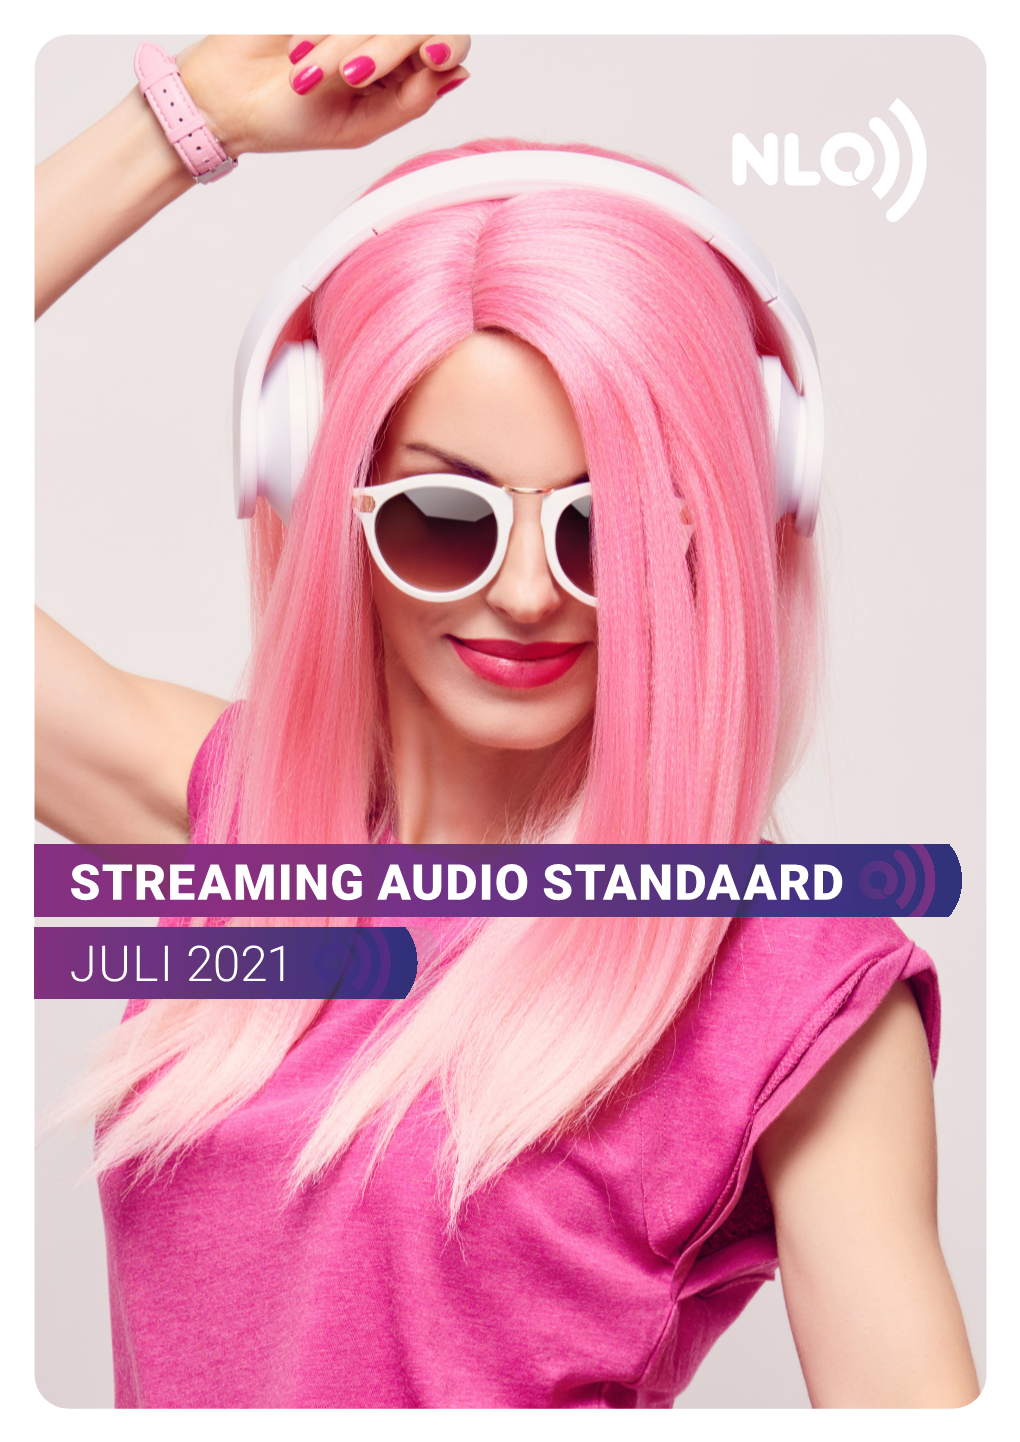 NLO Streaming Audio Standaard Juli 2021